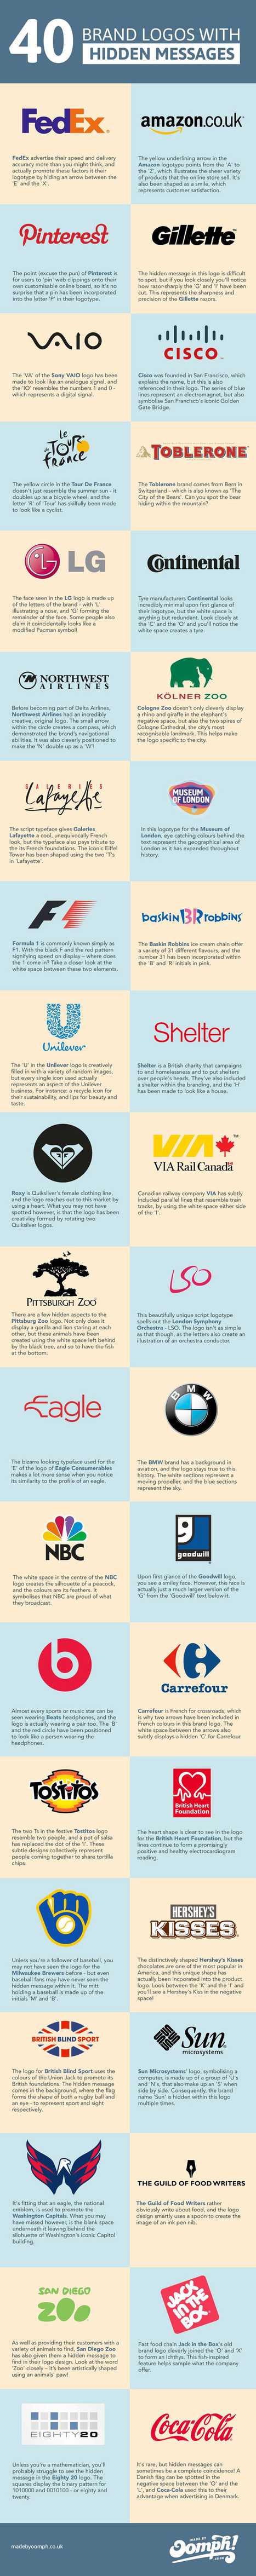 40 logos de marcas con mensajes ocultos #infografia #infographic #marketing | Seo, Social Media Marketing | Scoop.it